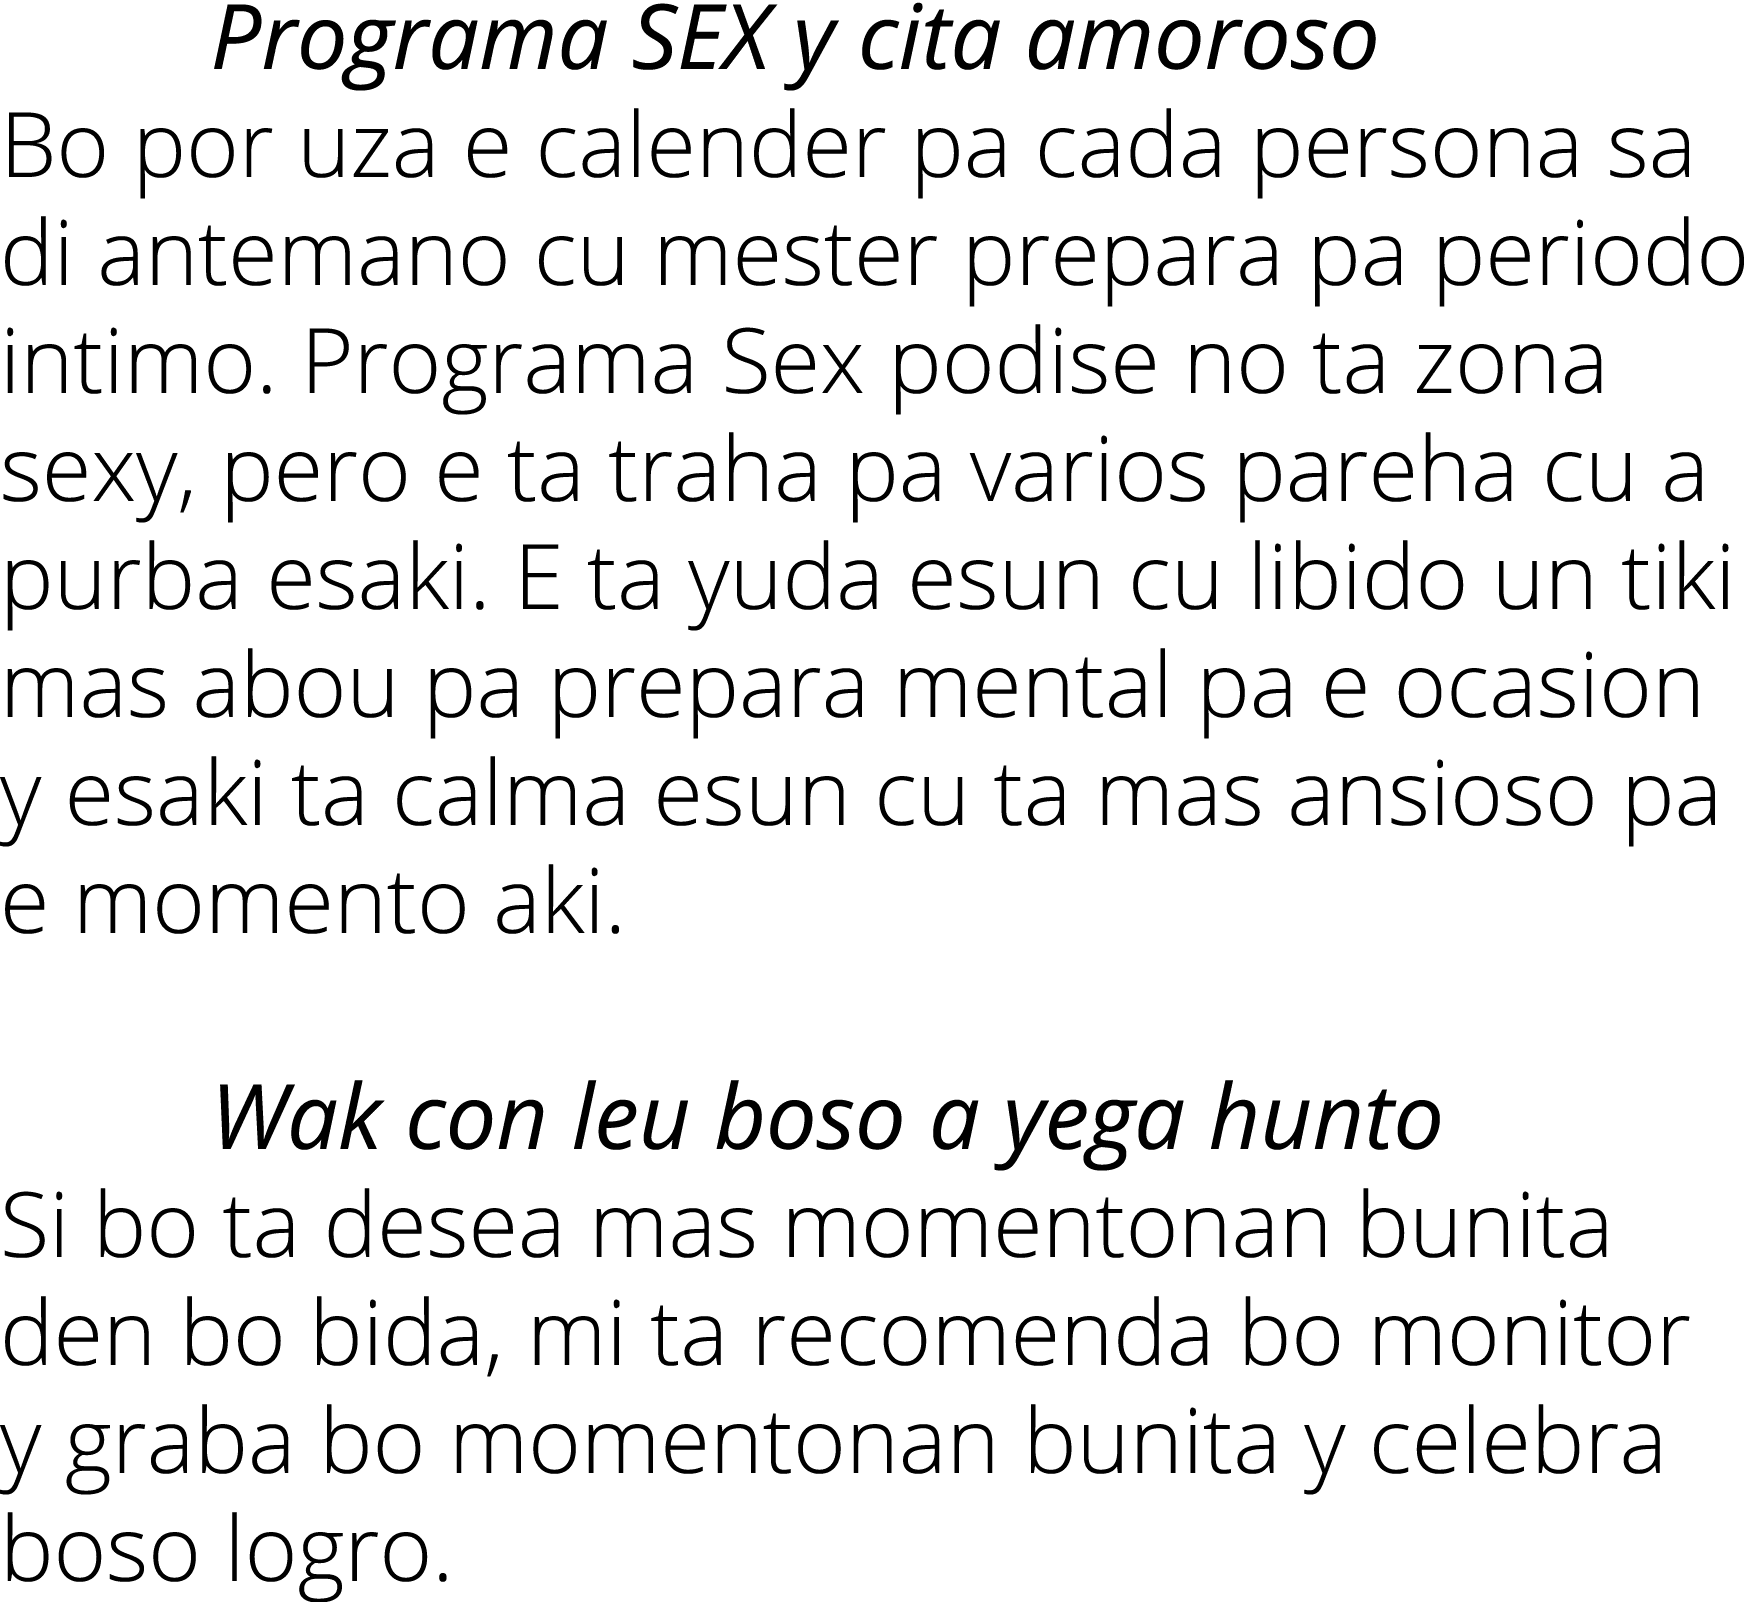  Programa SEX y cita amoroso Bo por uza e calender pa cada persona sa di antemano cu mester prepara pa periodo intimo...